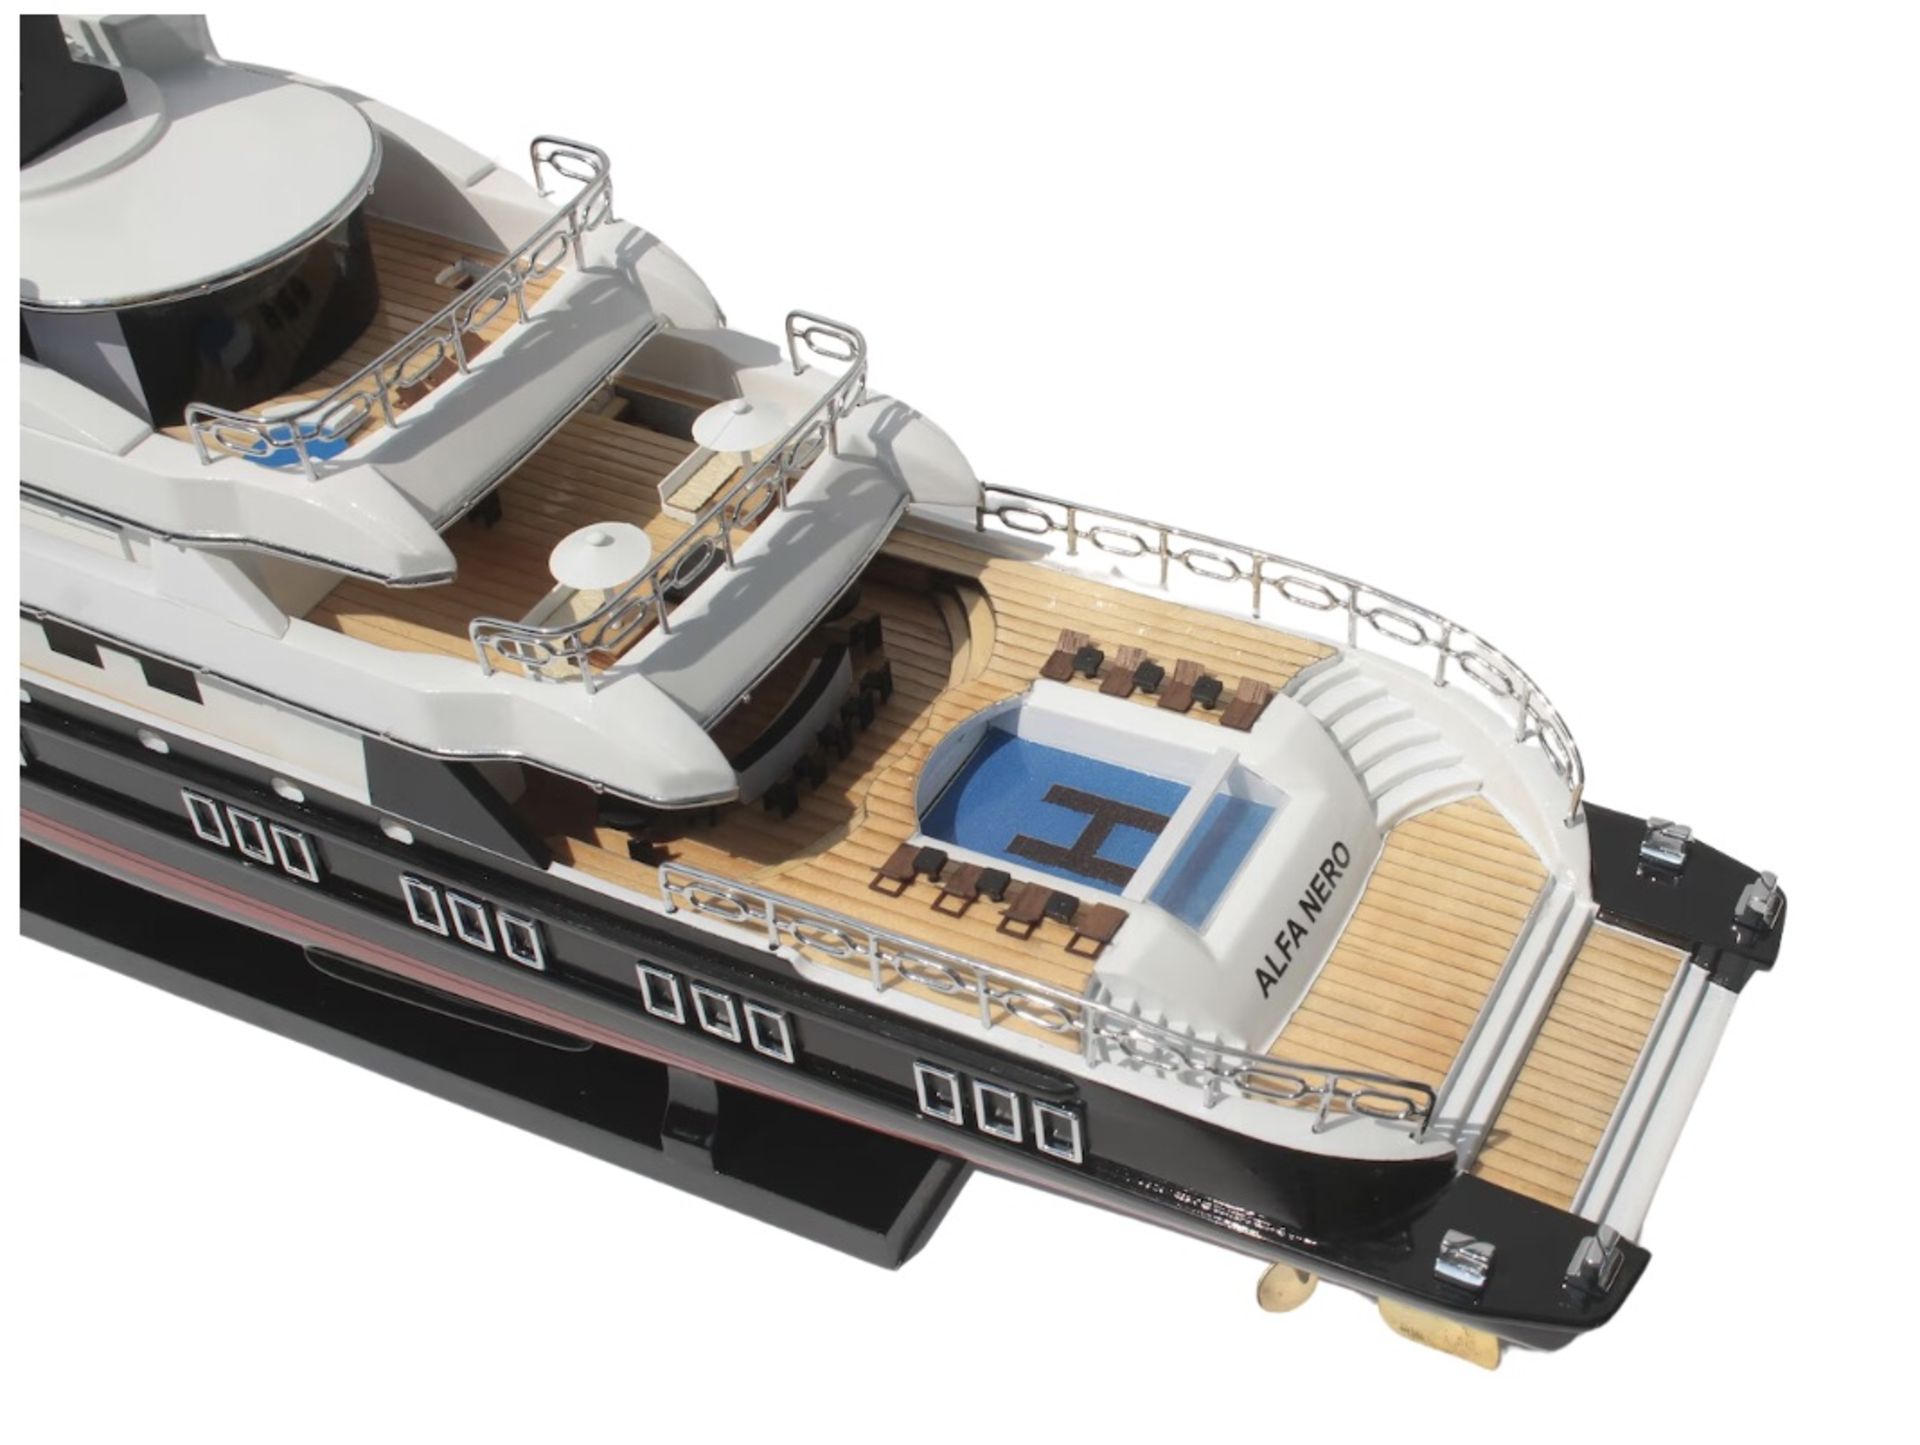 Alfa Nero Wooden Scale Yacht Display Model - Image 5 of 10